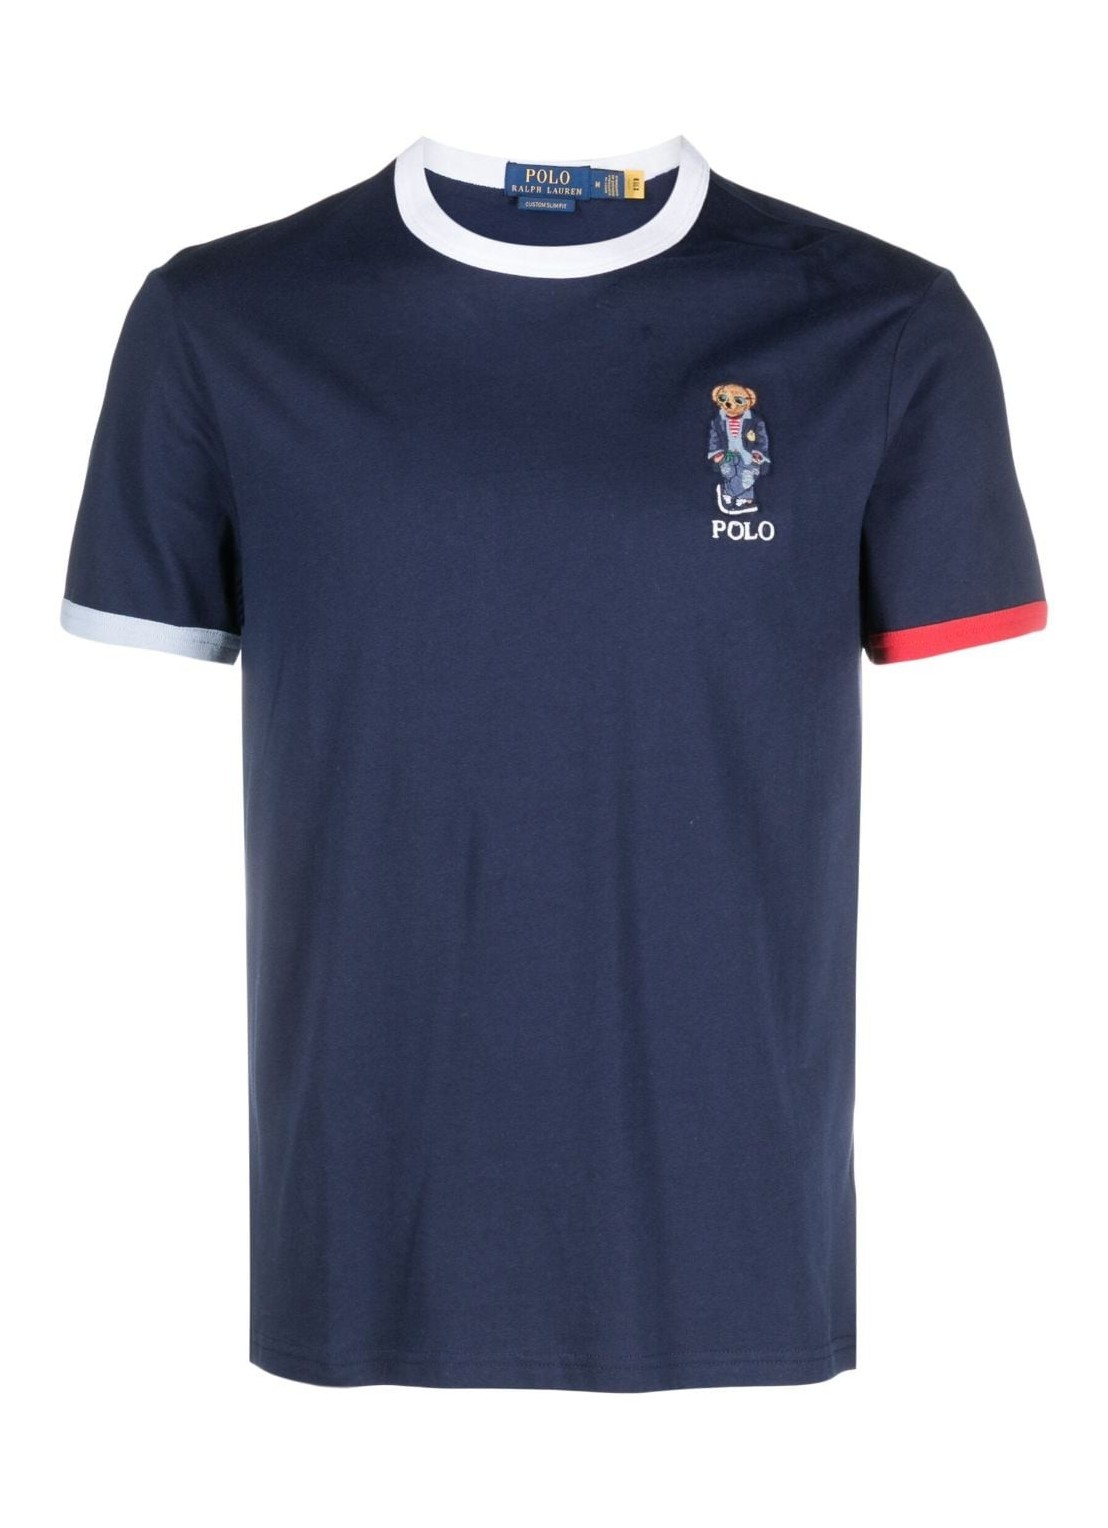 Camiseta polo ralph lauren t-shirt man sscncmslm11-short sleeve-t-shirt 710909789001 pf 23 cruise na